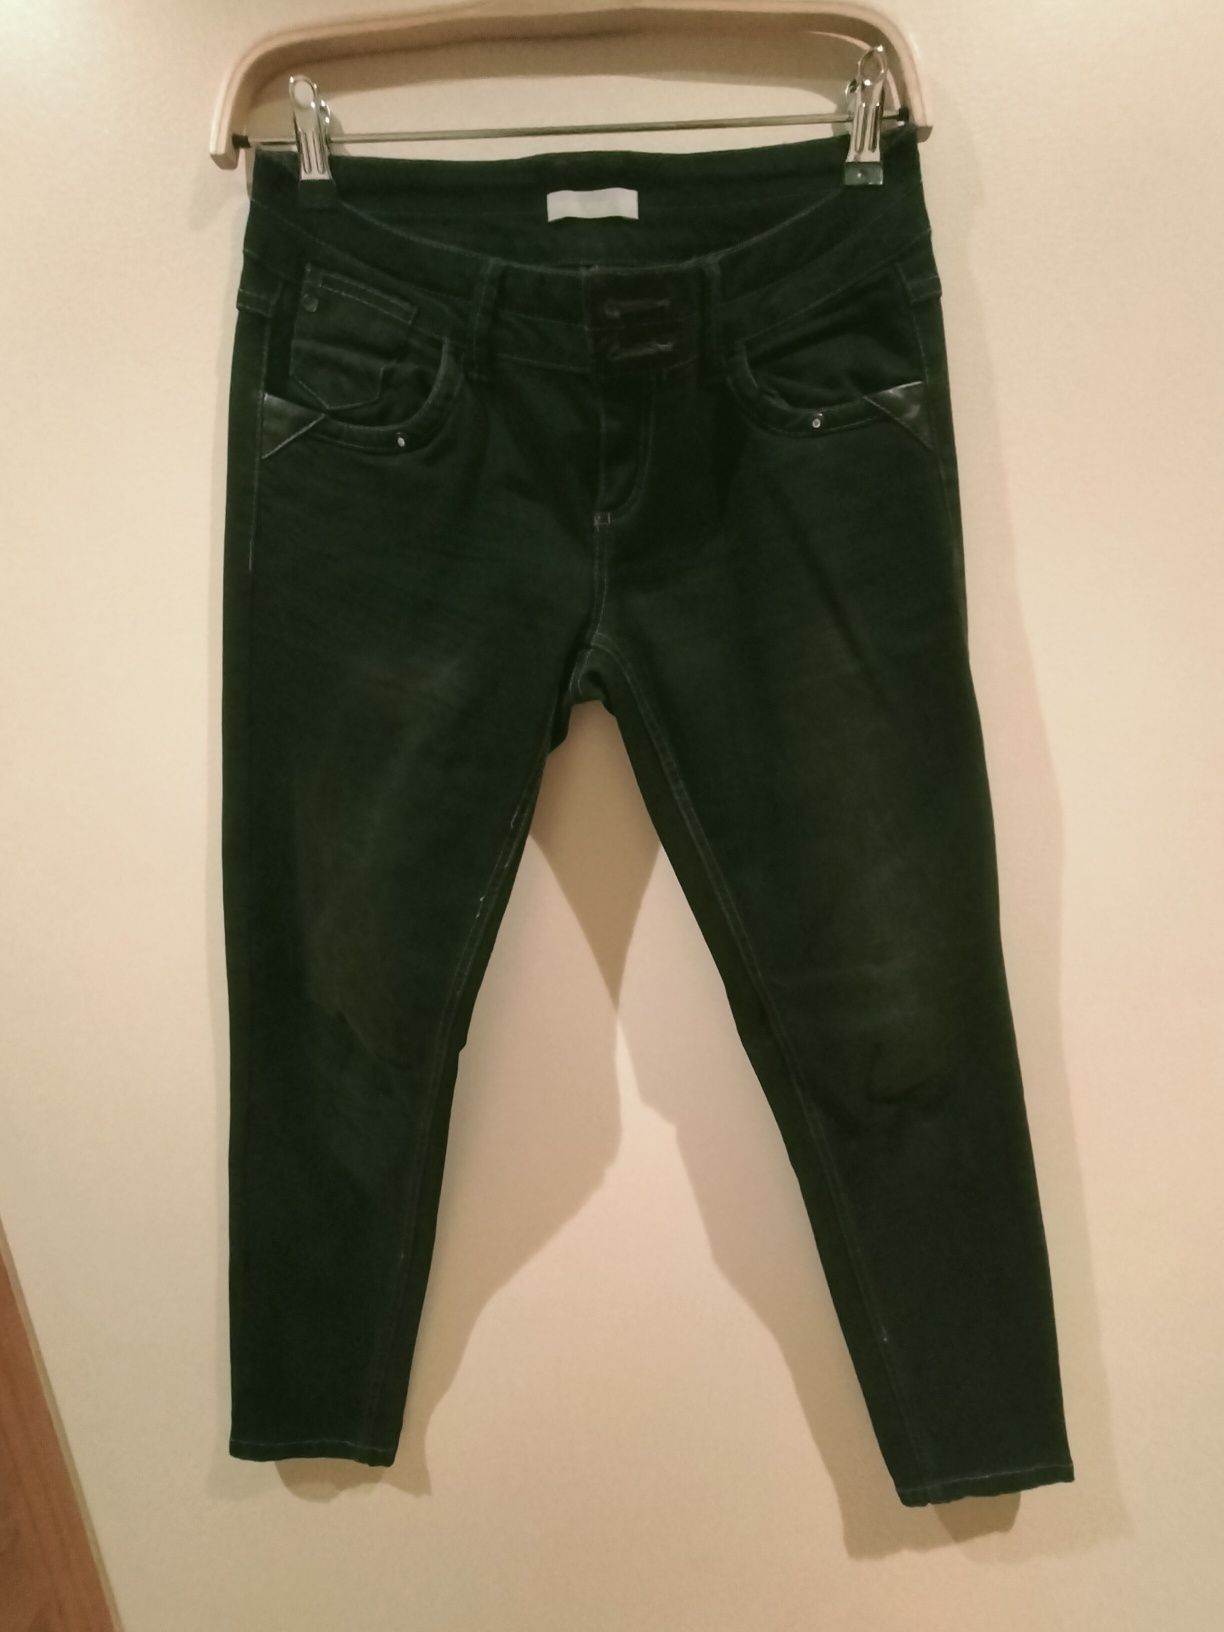 Jeans Promod tamanho 36